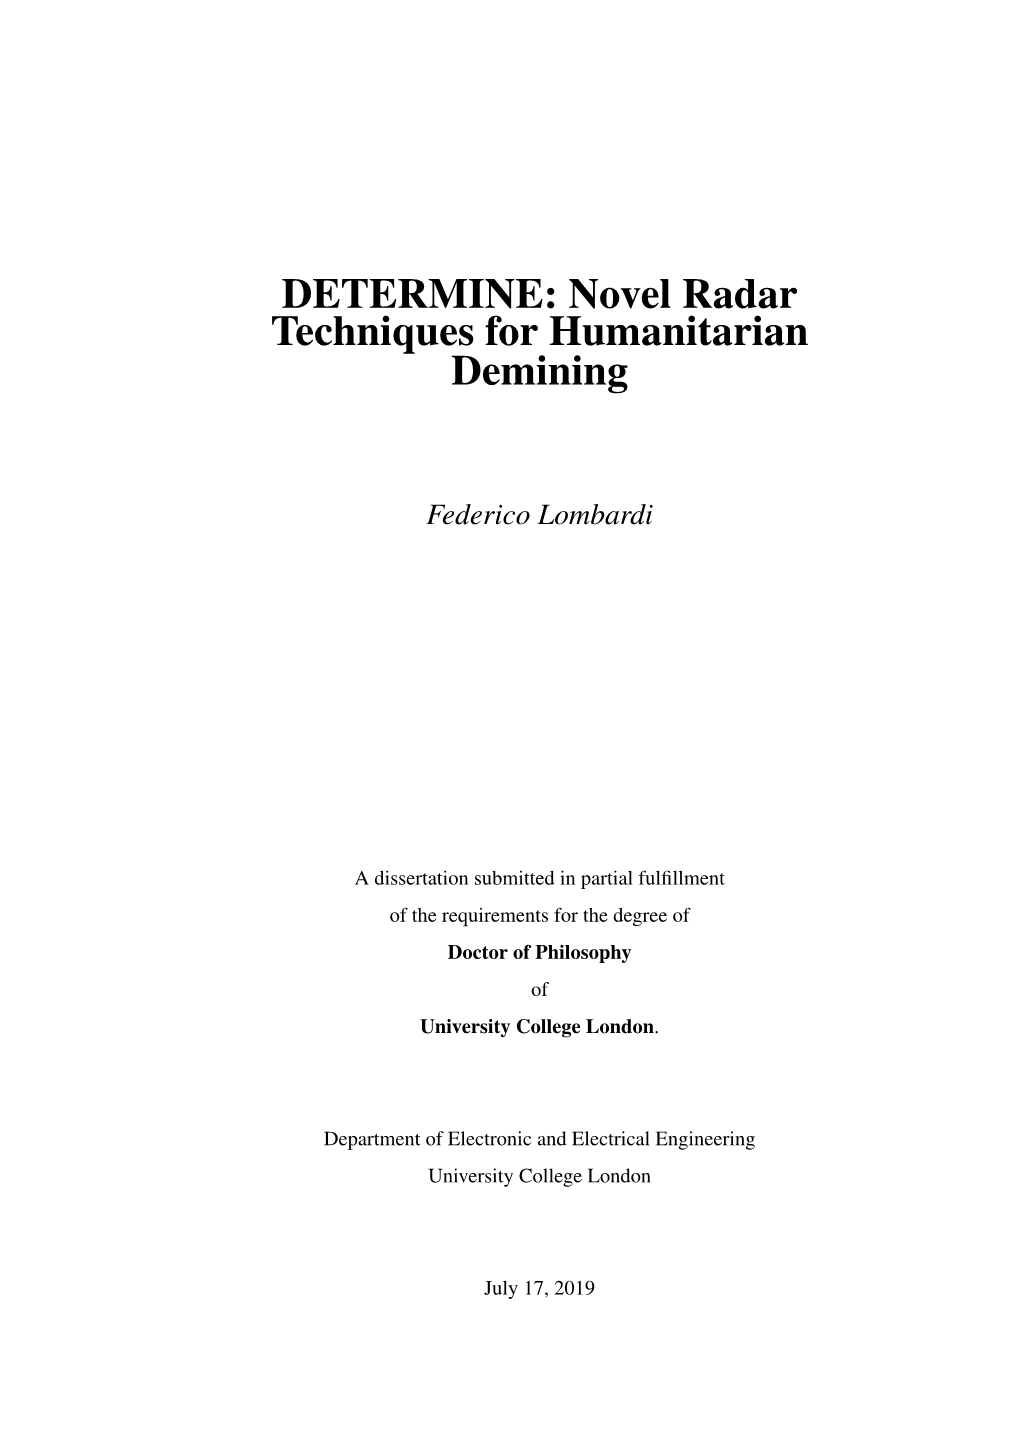 Novel Radar Techniques for Humanitarian Demining